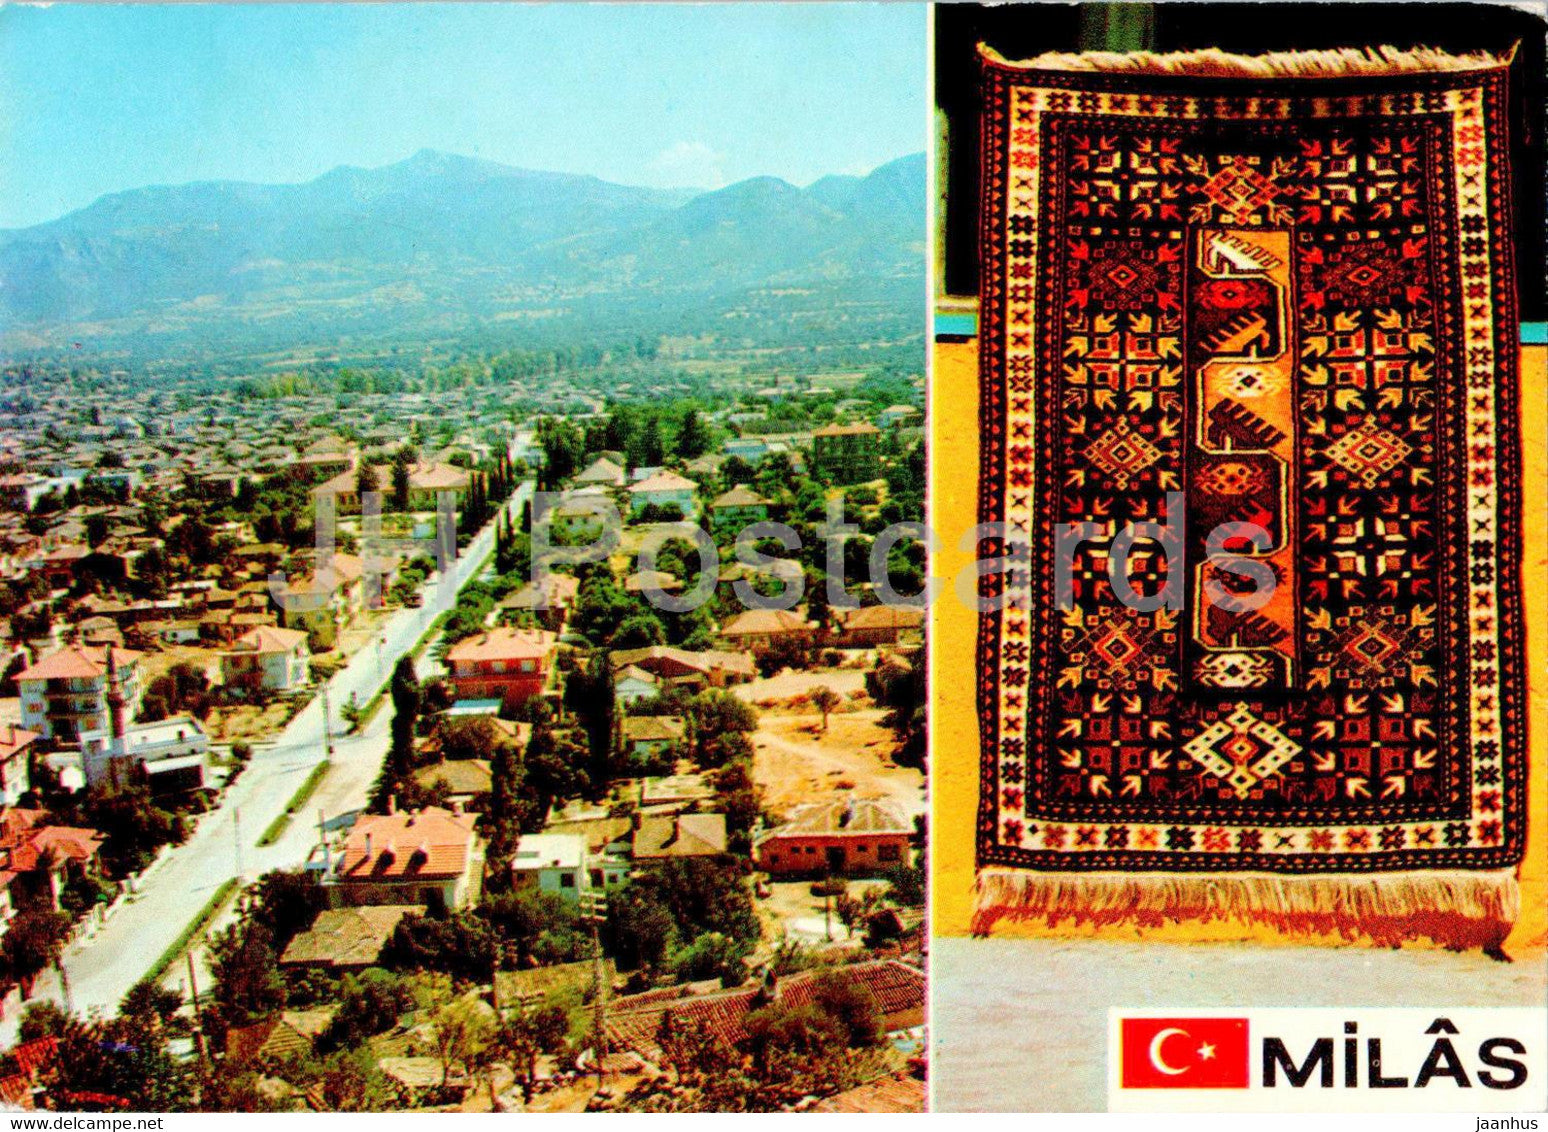 Milas - Umumi gorunus ve halisi - general view - carpet - 972 - Turkey - unused - JH Postcards